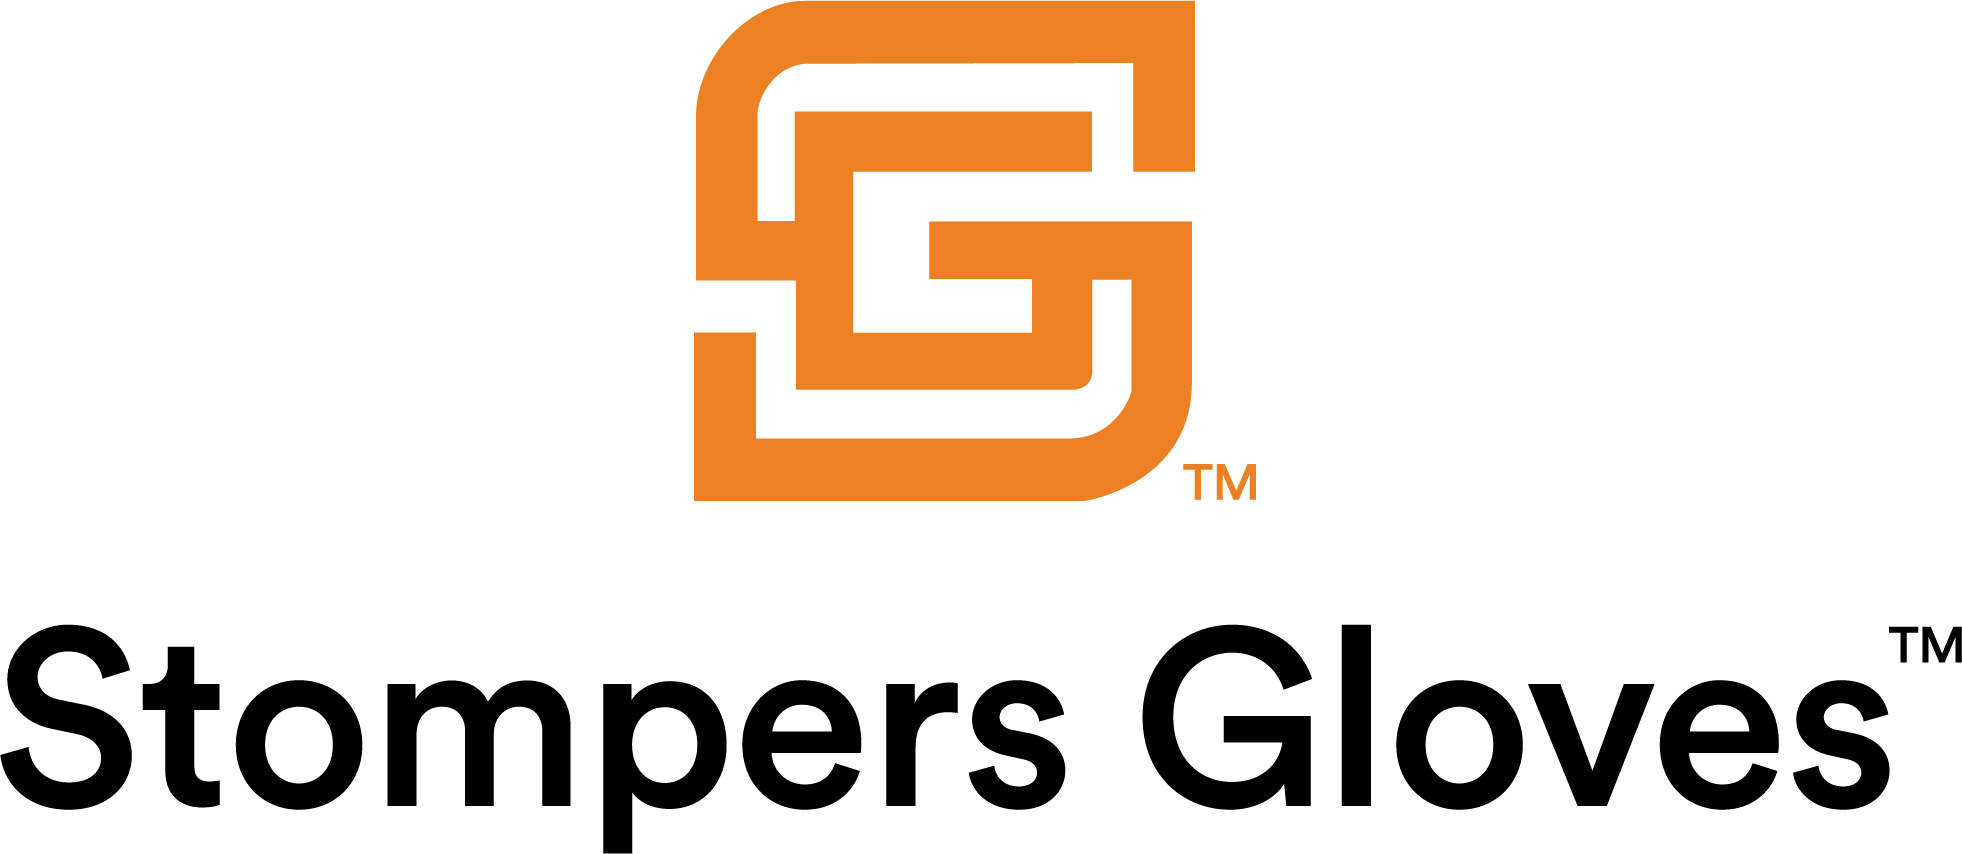 SG Logo Black